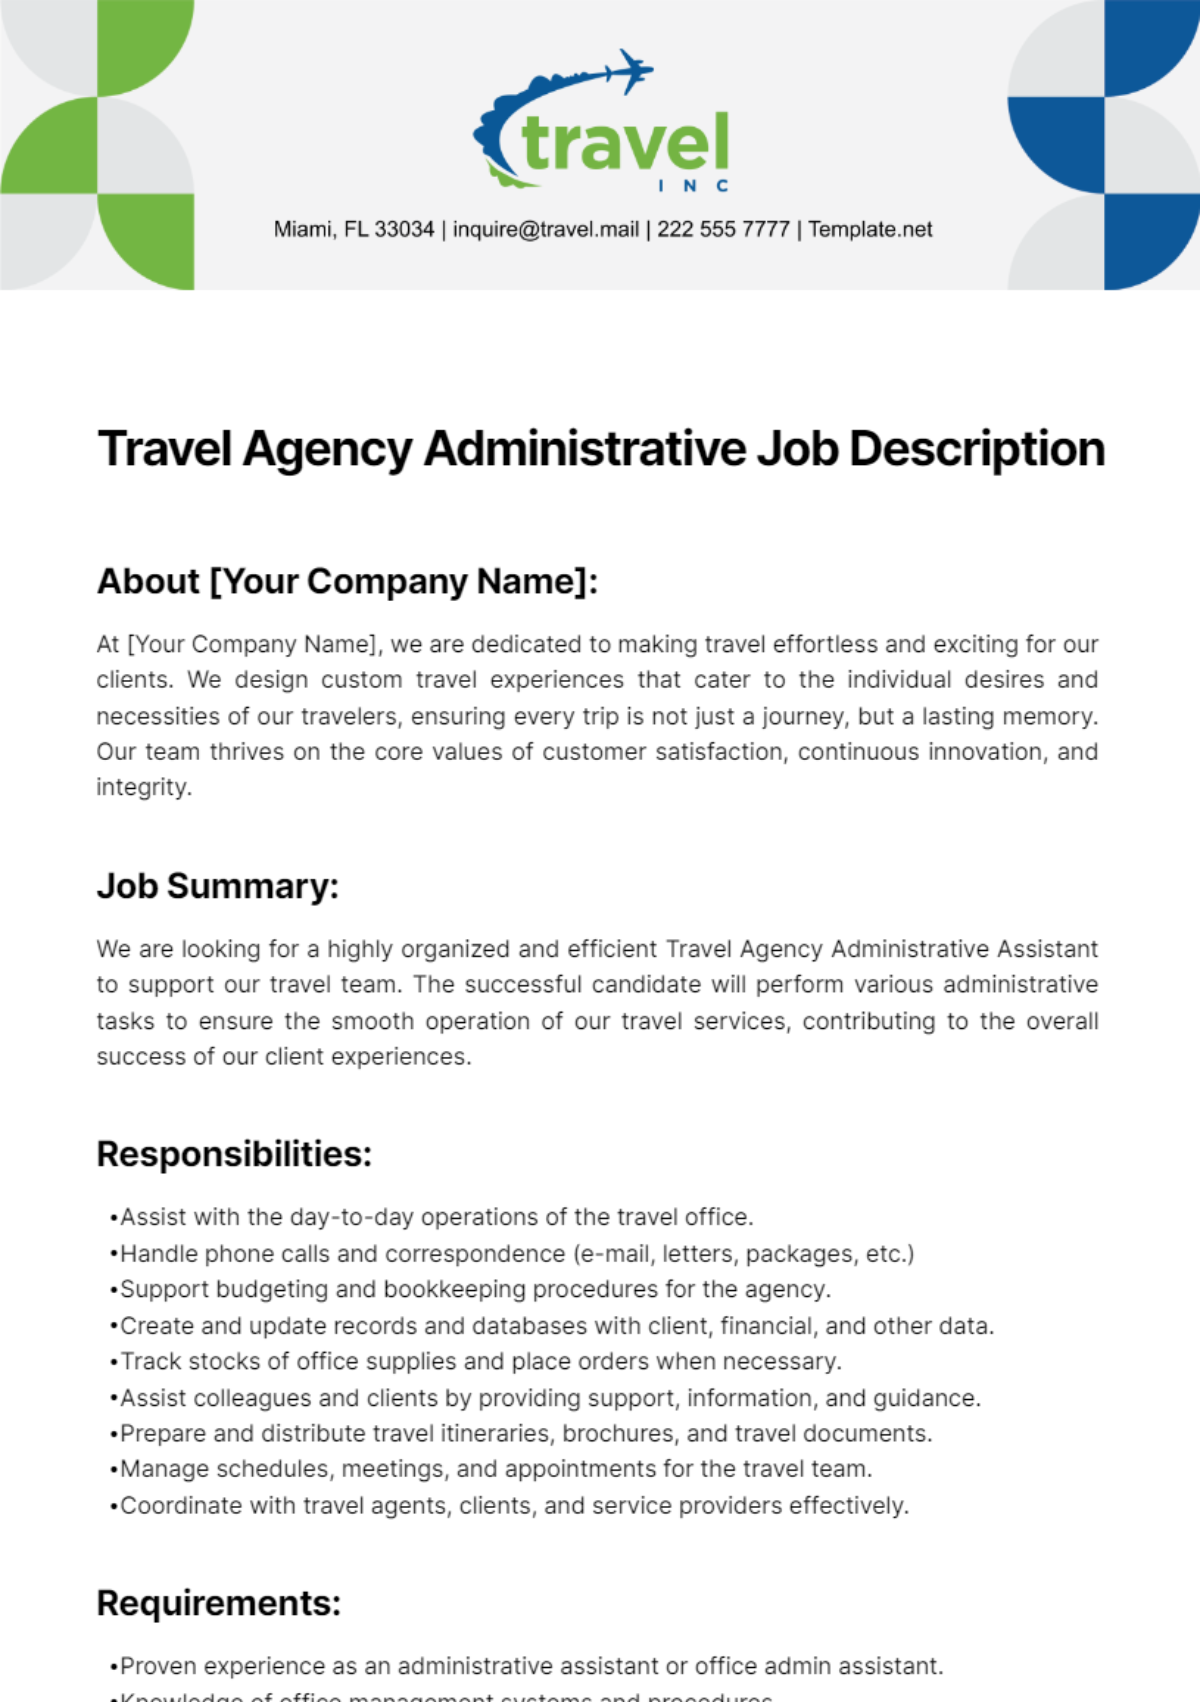 Free Travel Agency Administrative Job Description Template